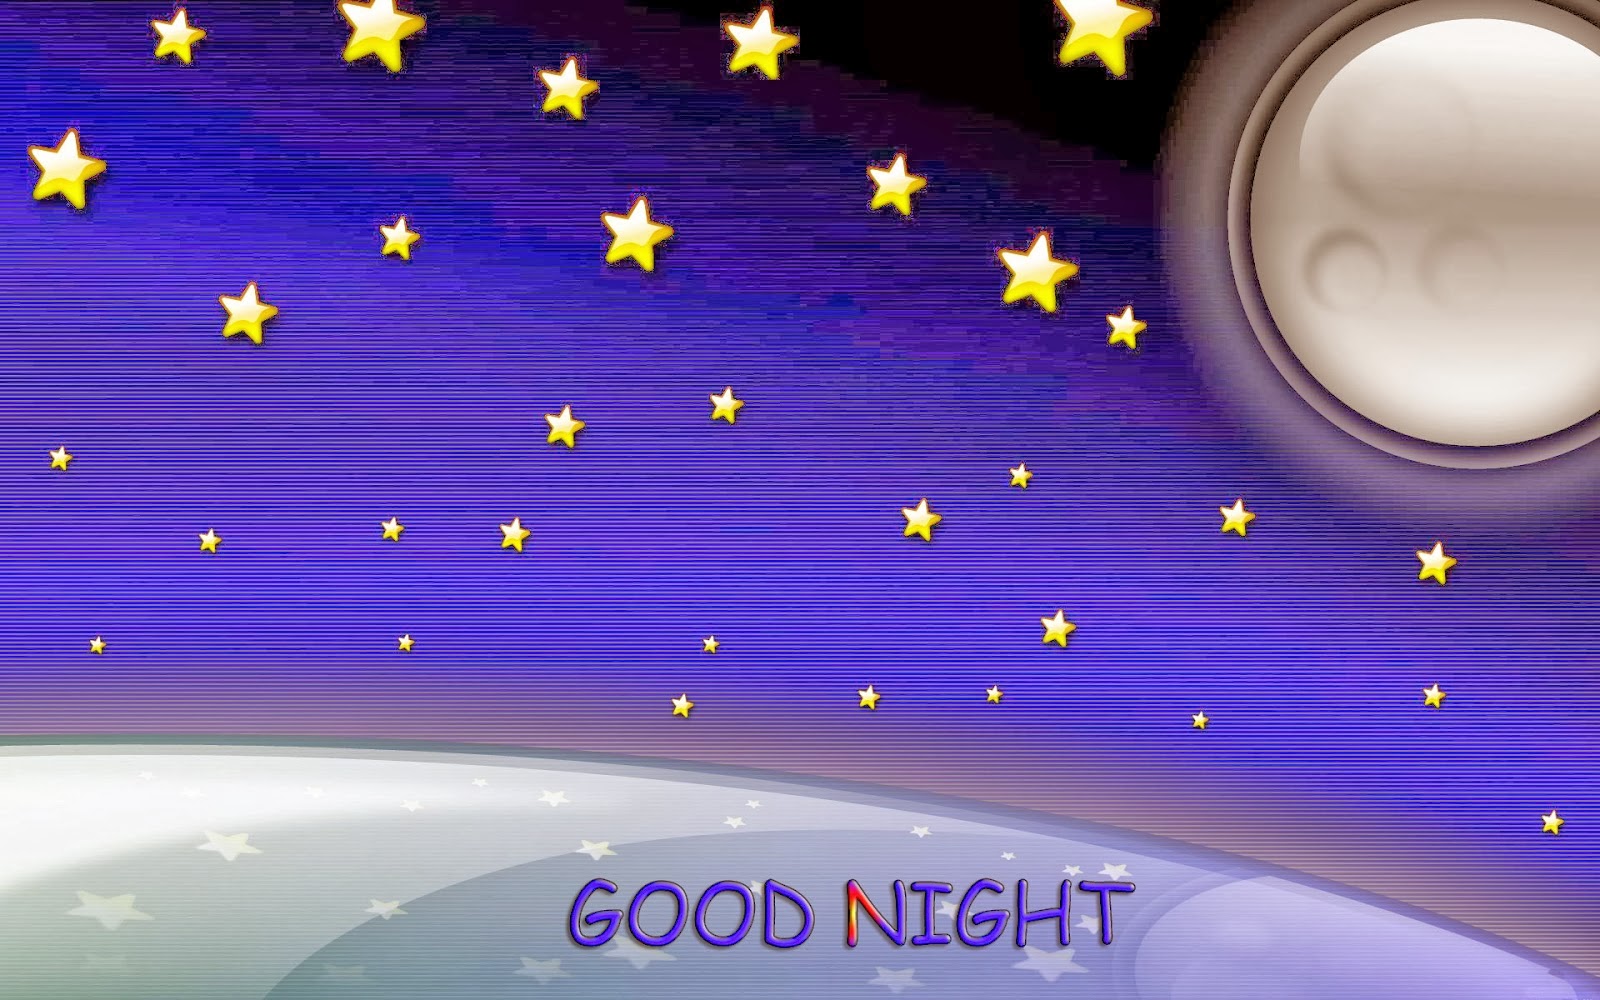 good night wallpaper,violet,purple,sky,lavender,space